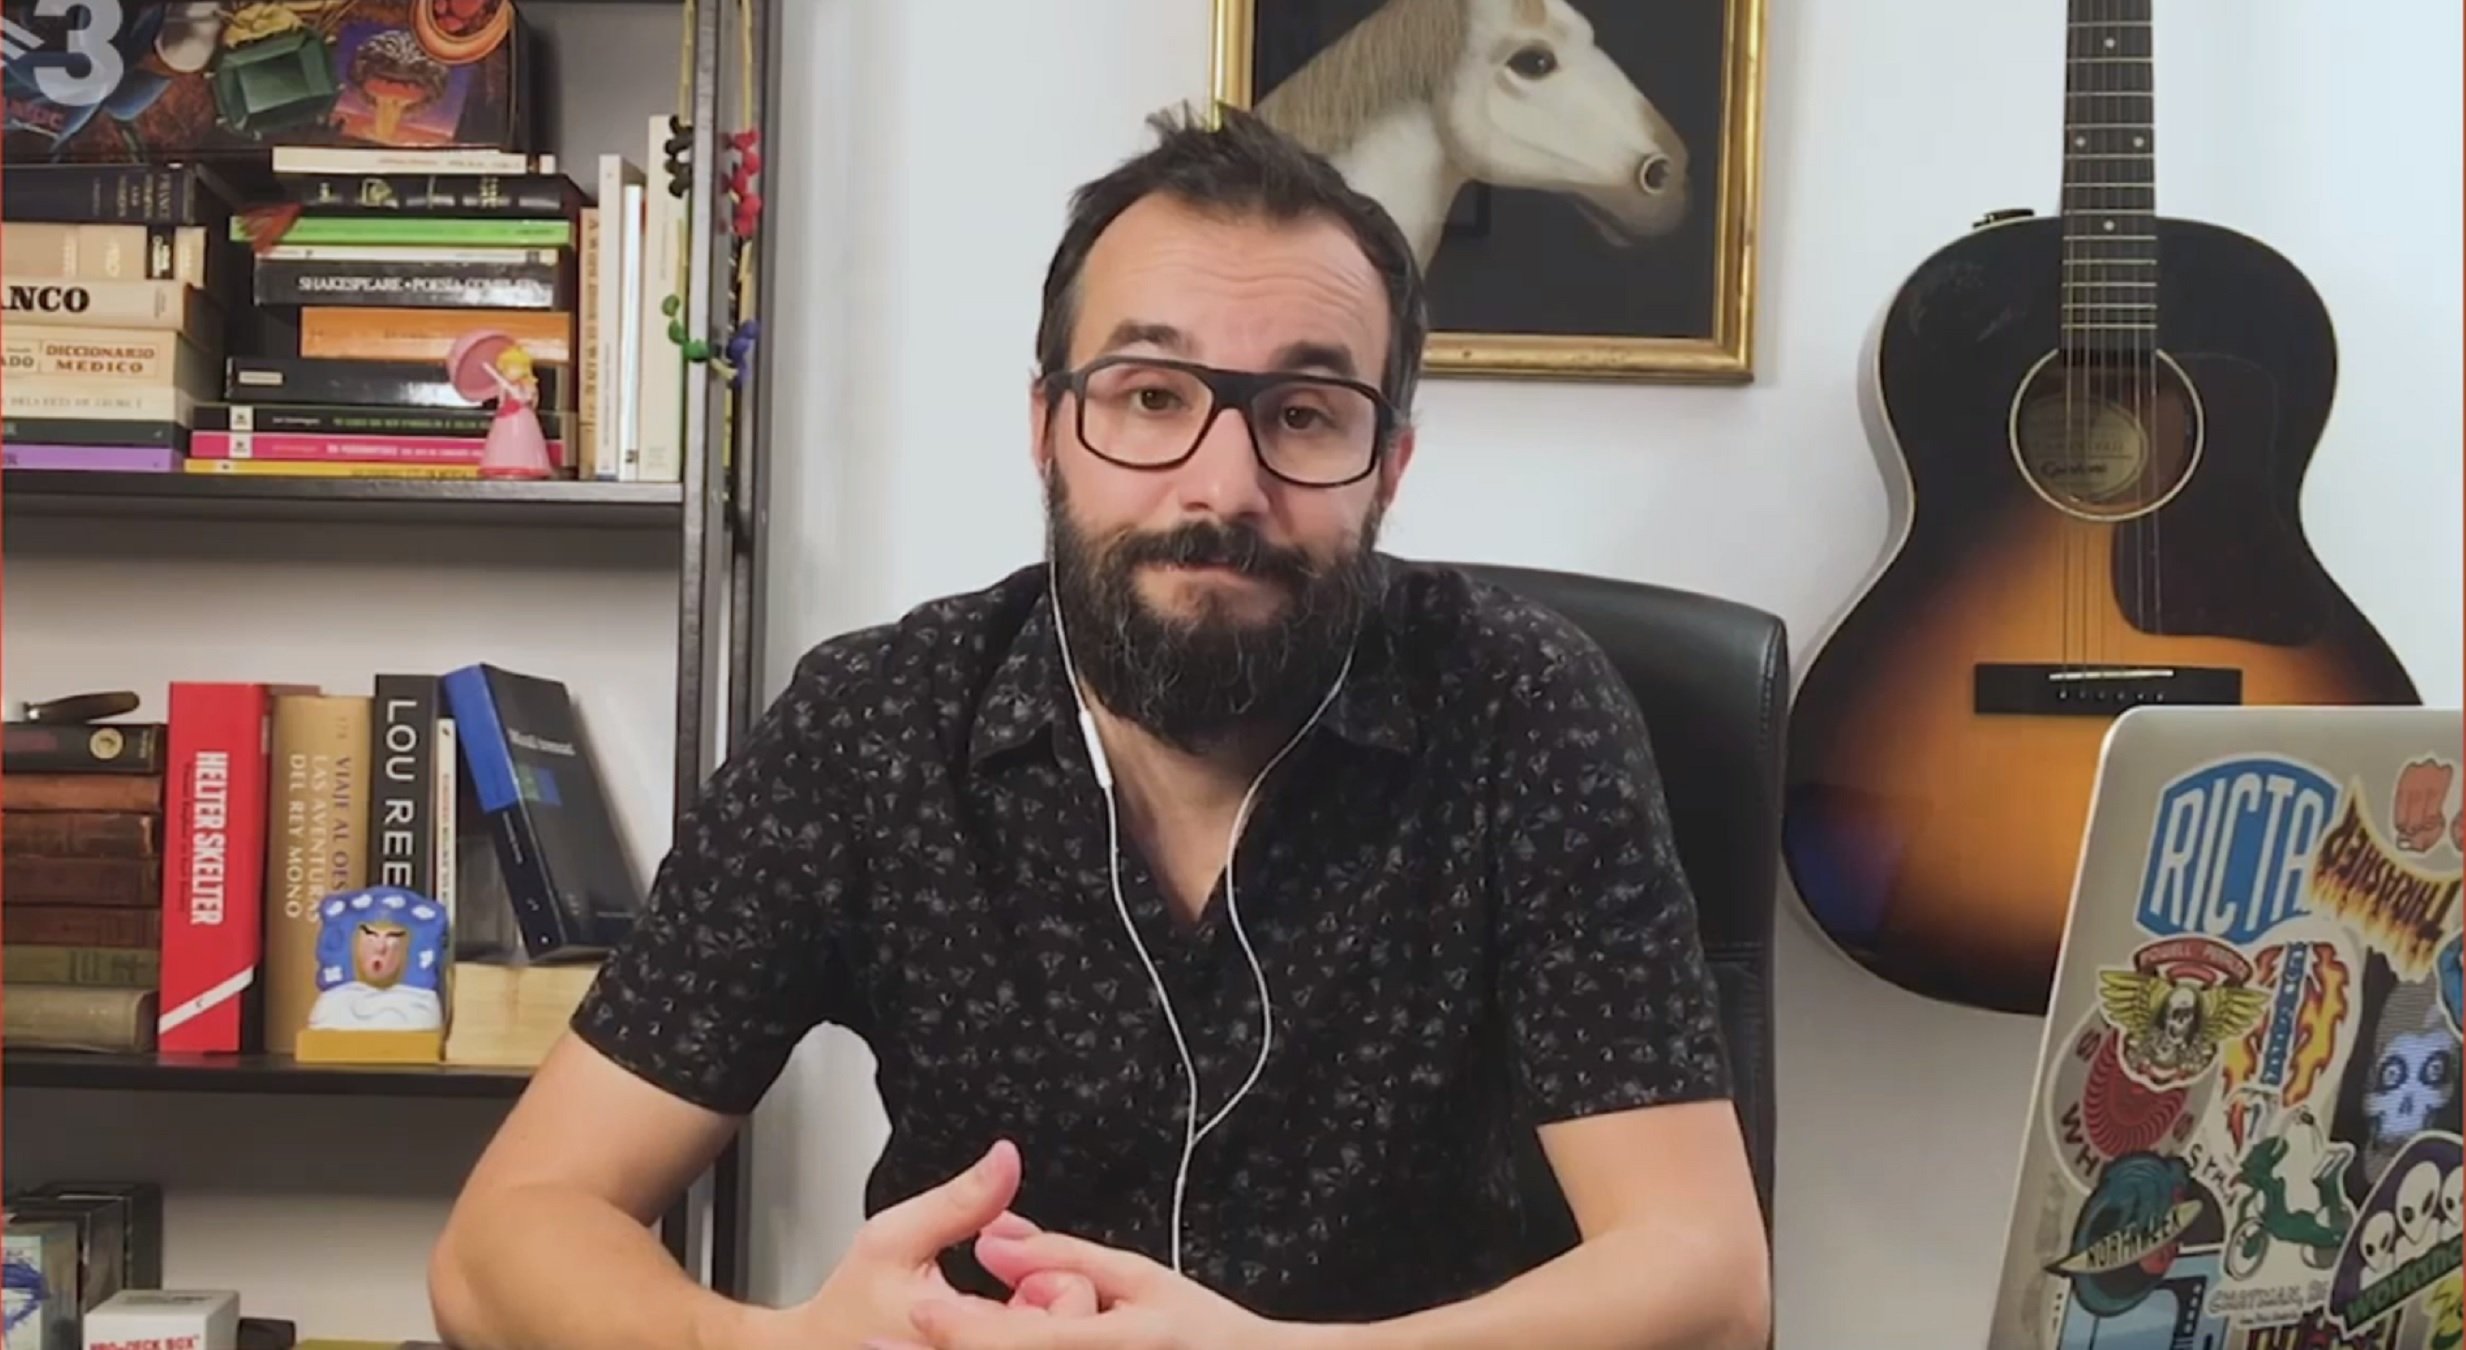 Insulten Jair Domínguez per un gag sobre andalusos: "Tú eres imbécil, gentuza"